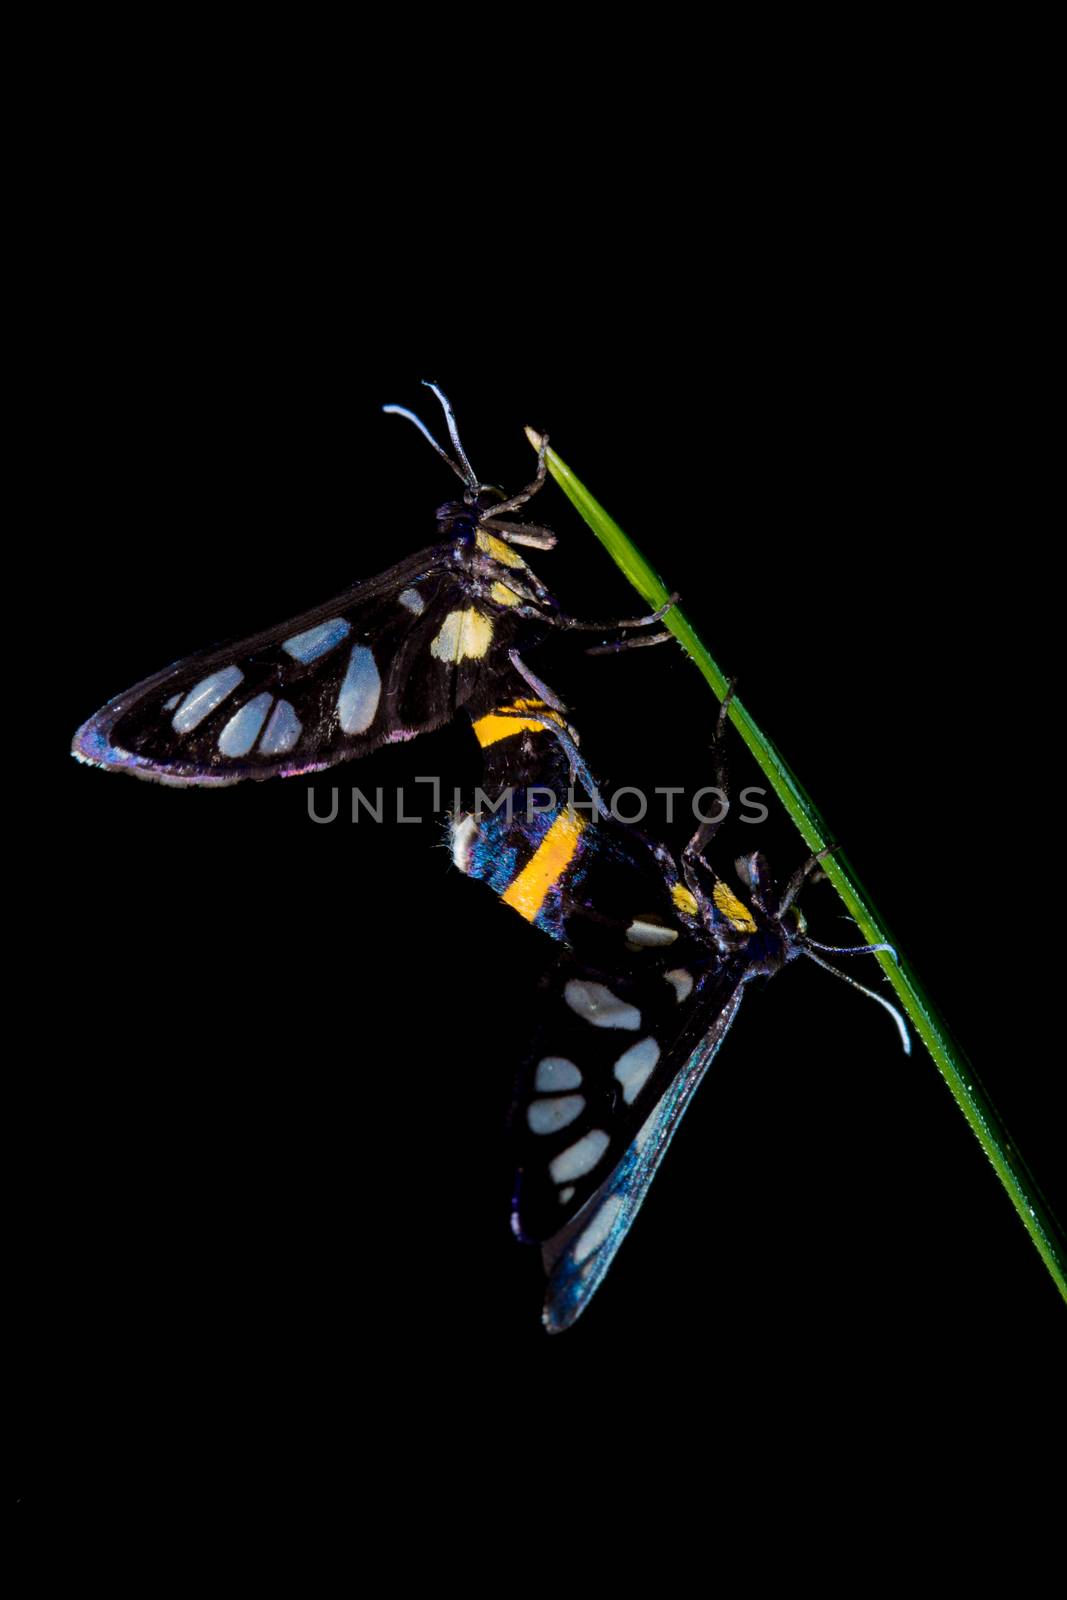 mating butterflies on blackground